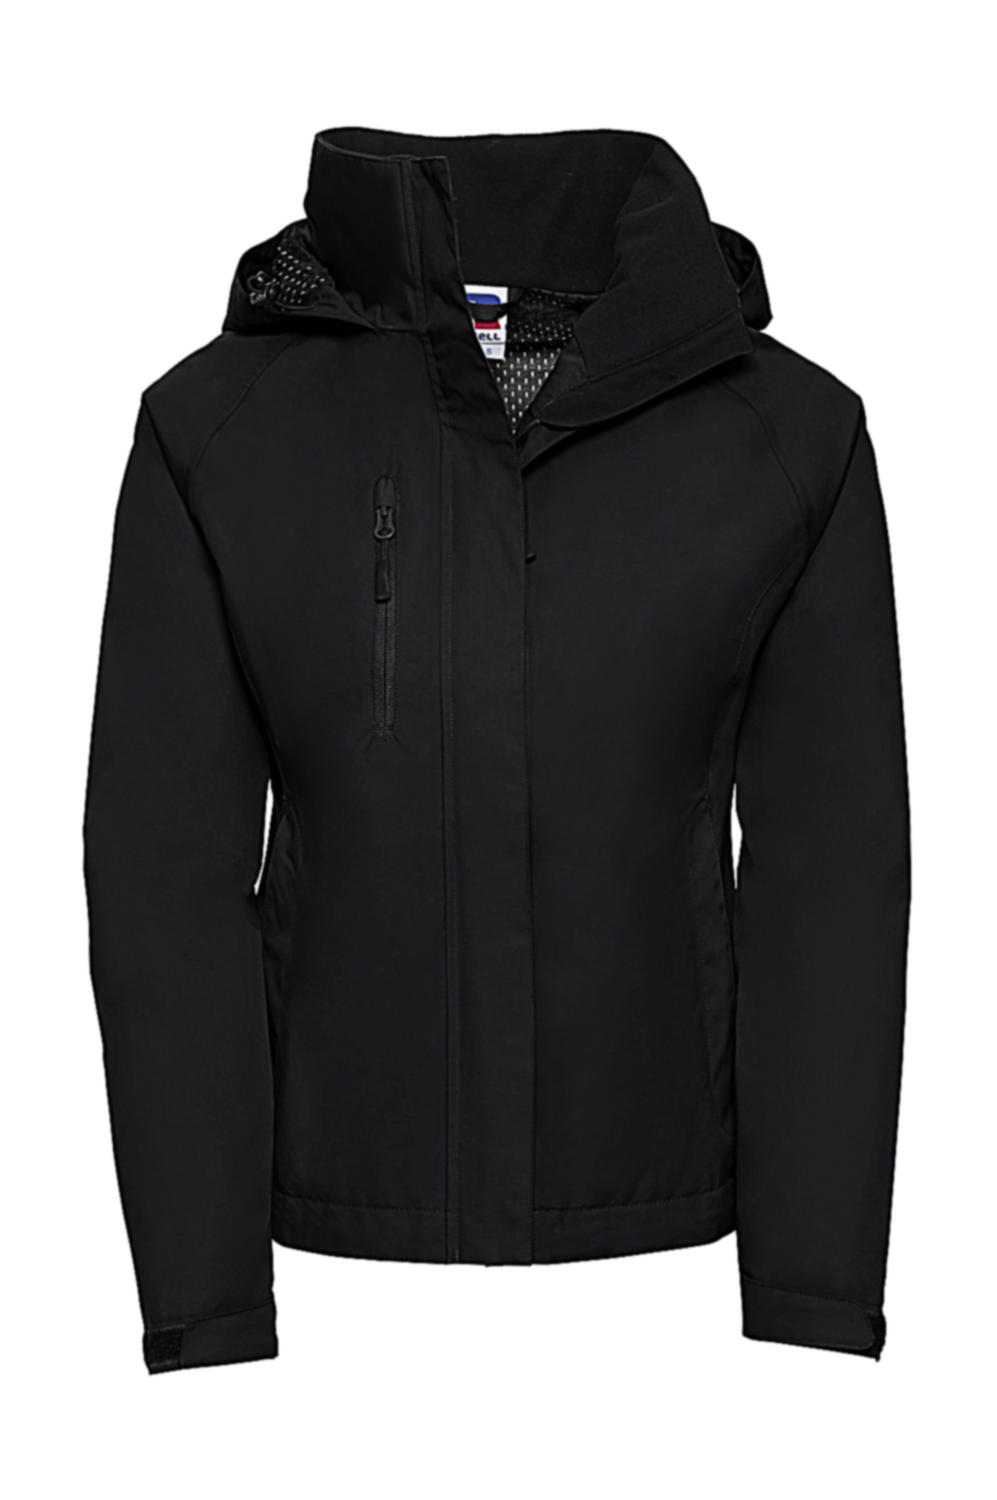  Ladies HydraPlus 2000 Jacket in Farbe Black